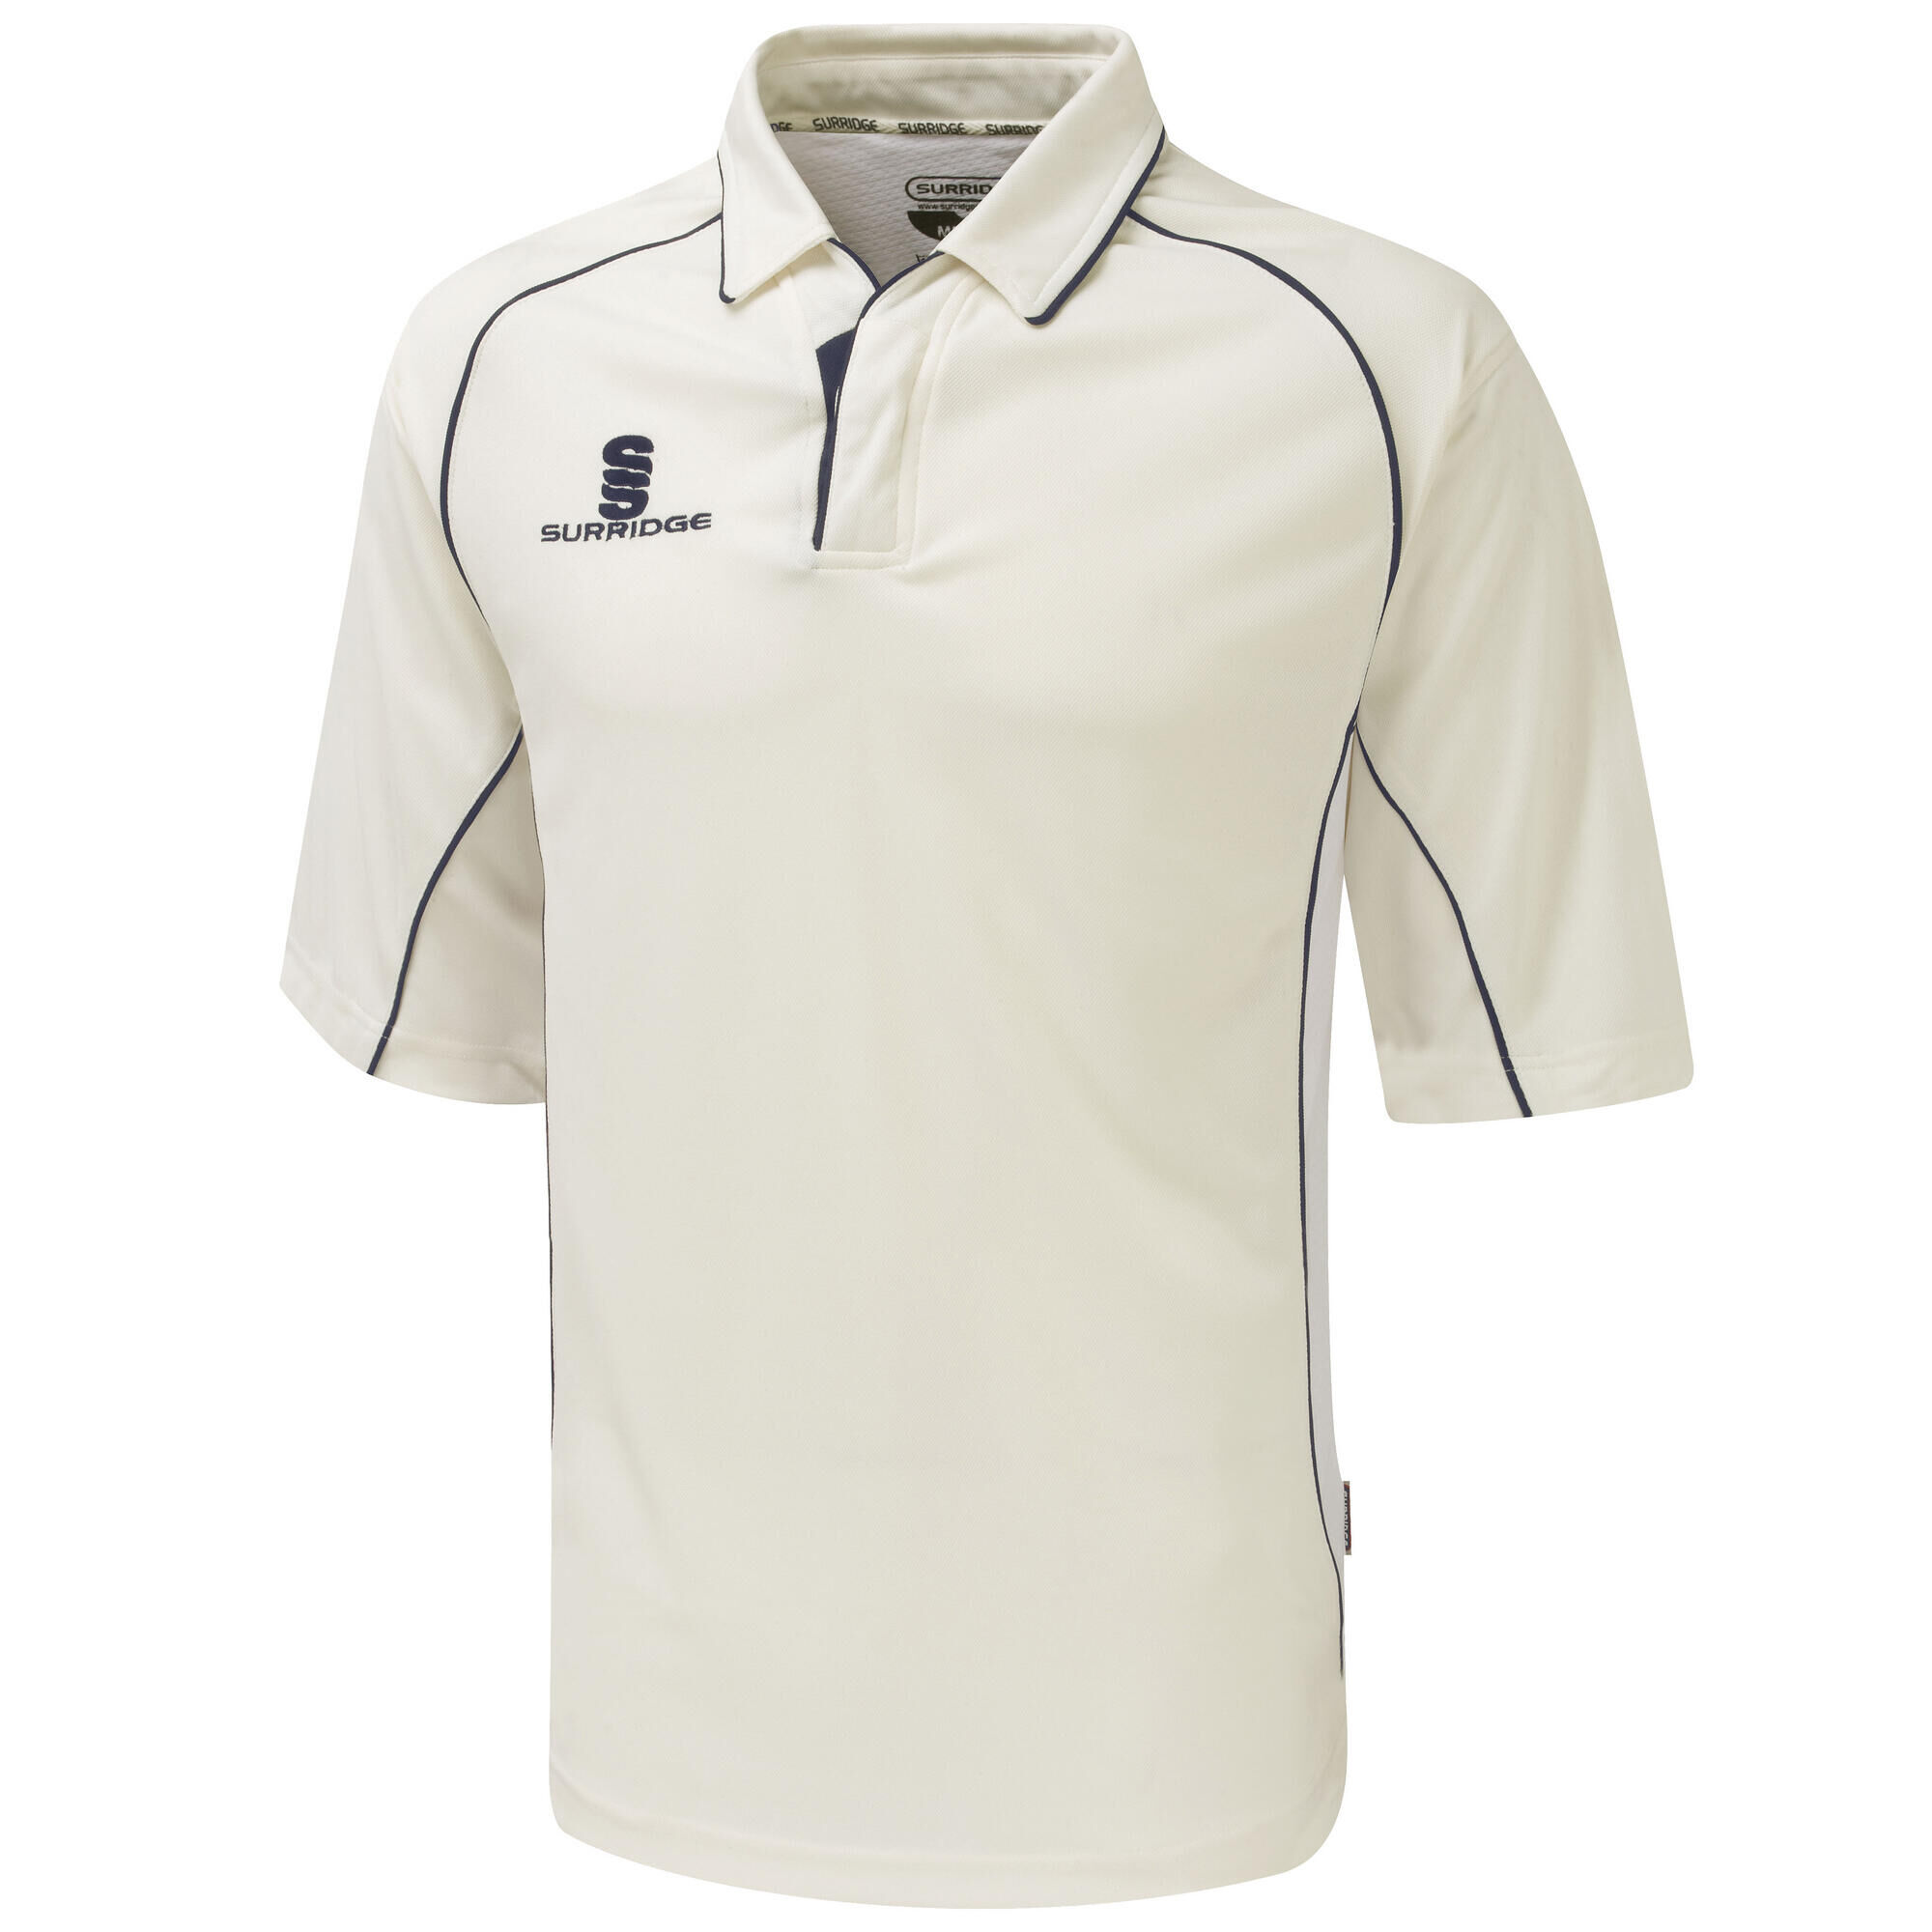 SURRIDGE Mens/Youth Premier Sports 3/4 Sleeve Polo Shirt (White/Navy trim)